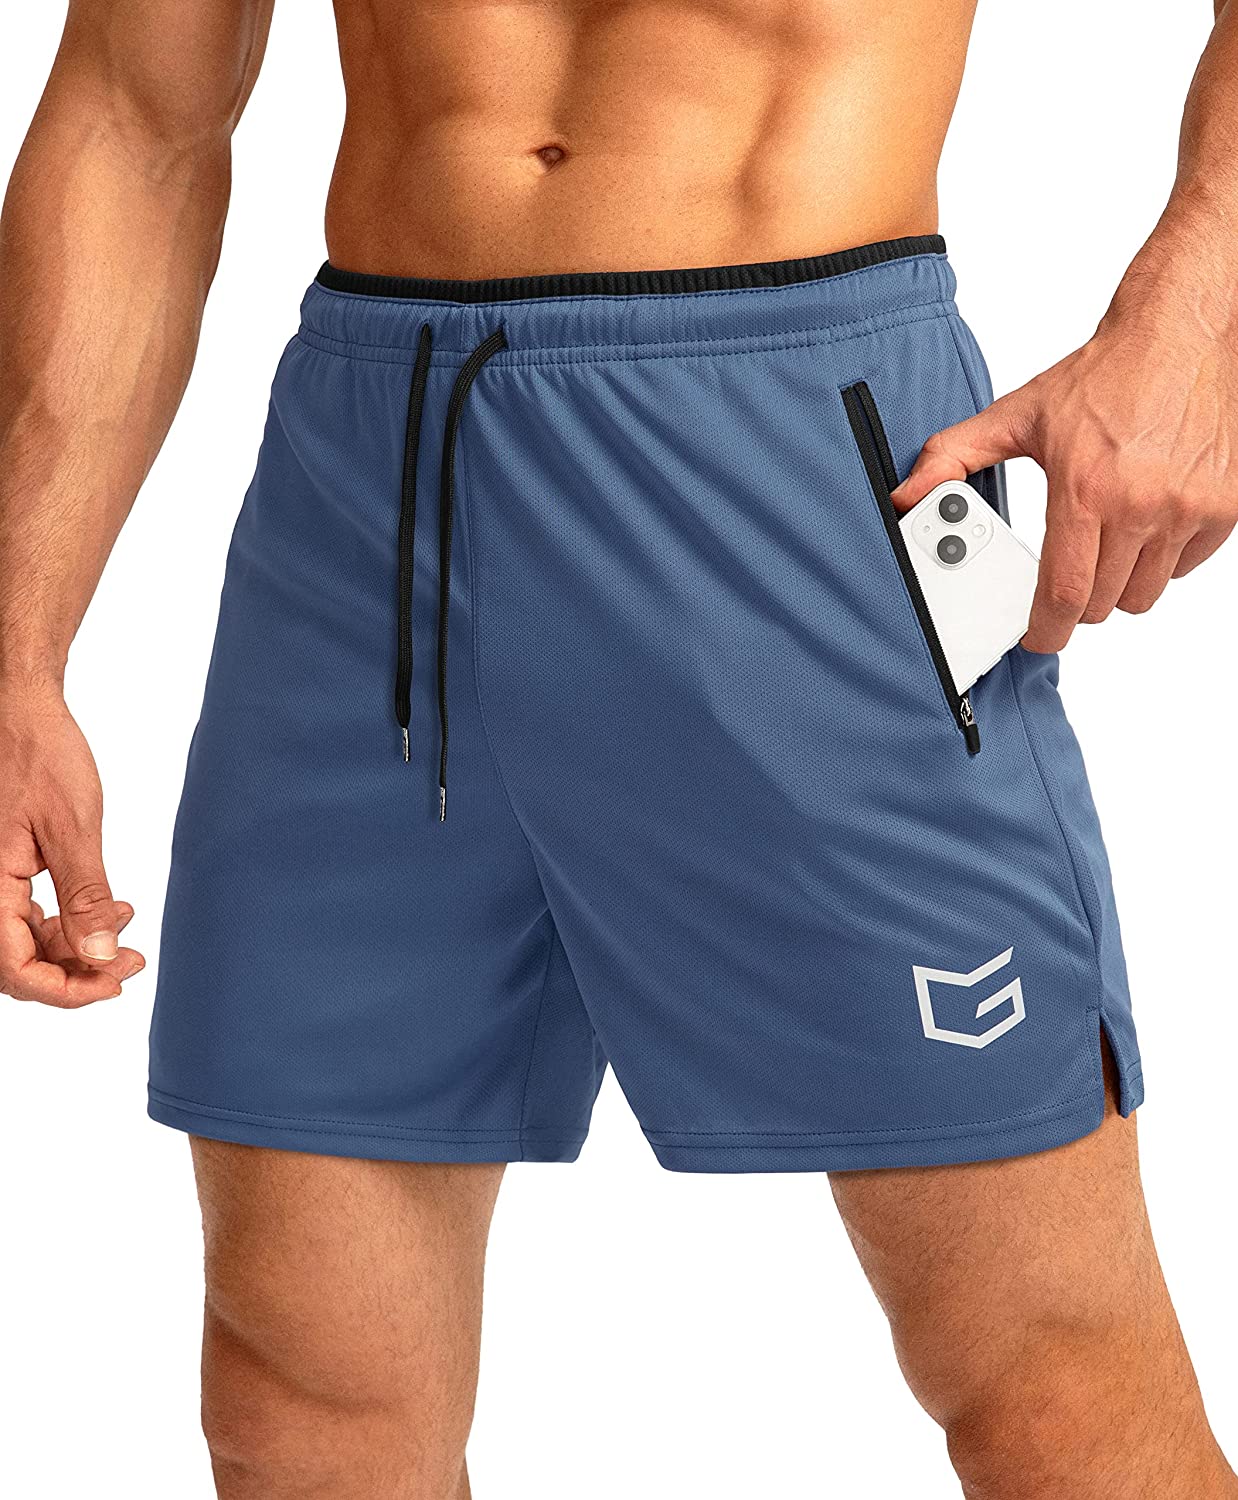 G Gradual Men's 7 Workout Running Shorts Quick Dry Lightweight Gym Shorts with Zip Pockets 